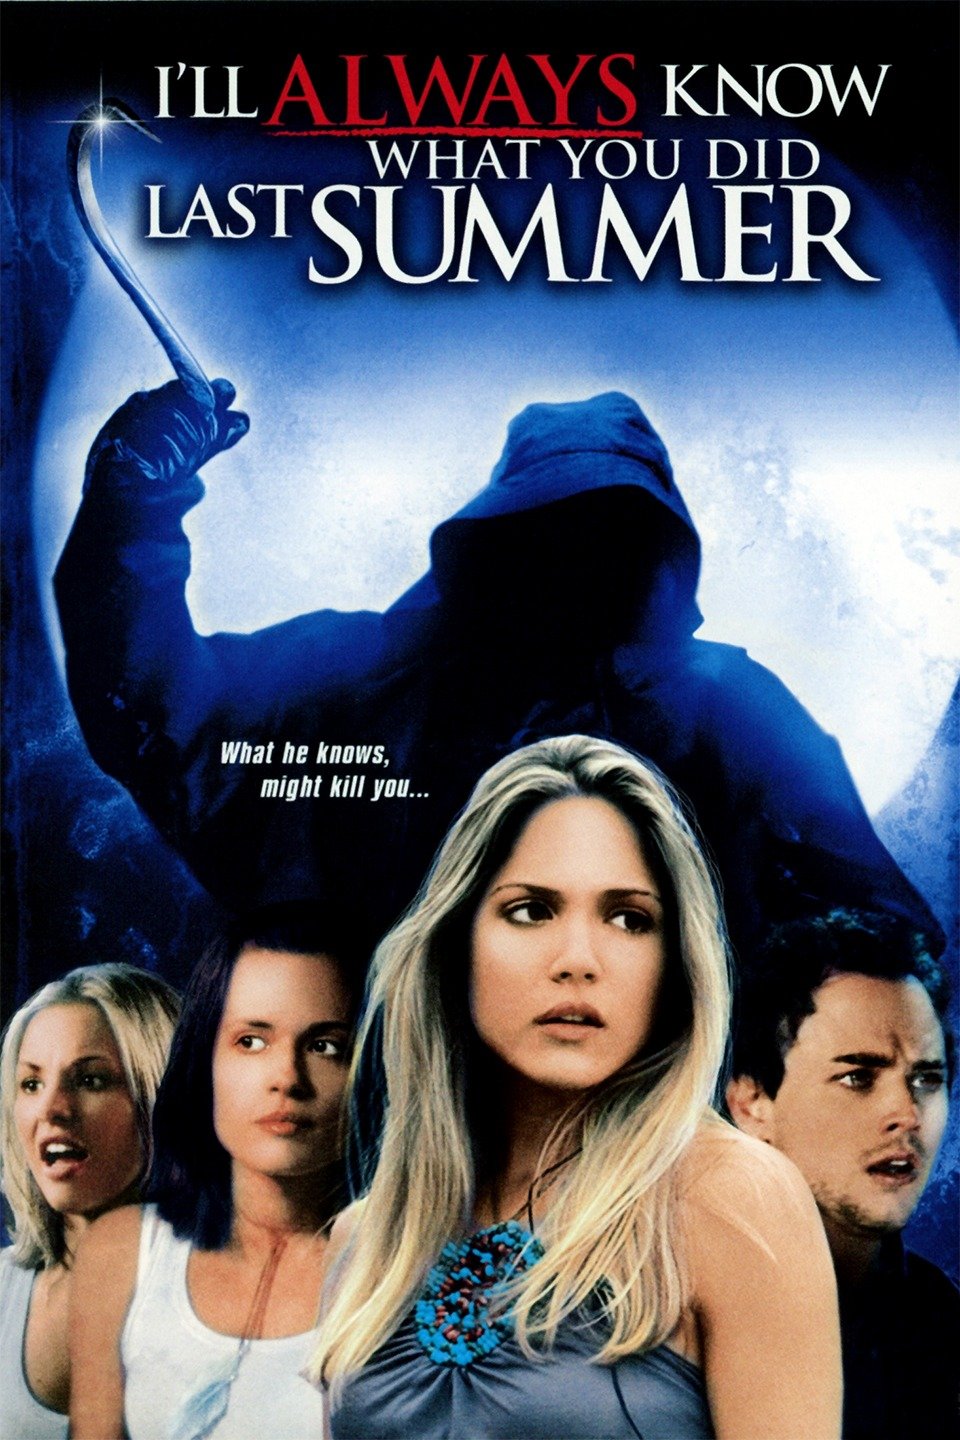 [MINI-HD] I’ll Always Know What You Did Last Summer (2006) ซัมเมอร์สยอง…ต้องหวีด ภาค 3 [720P] [พากย์ไทย 5.1 + เสียงอังกฤษ 5.1] [บรรยายไทย + อังกฤษ] [เสียงไทย + ซับไทย] [PANDAFILE]